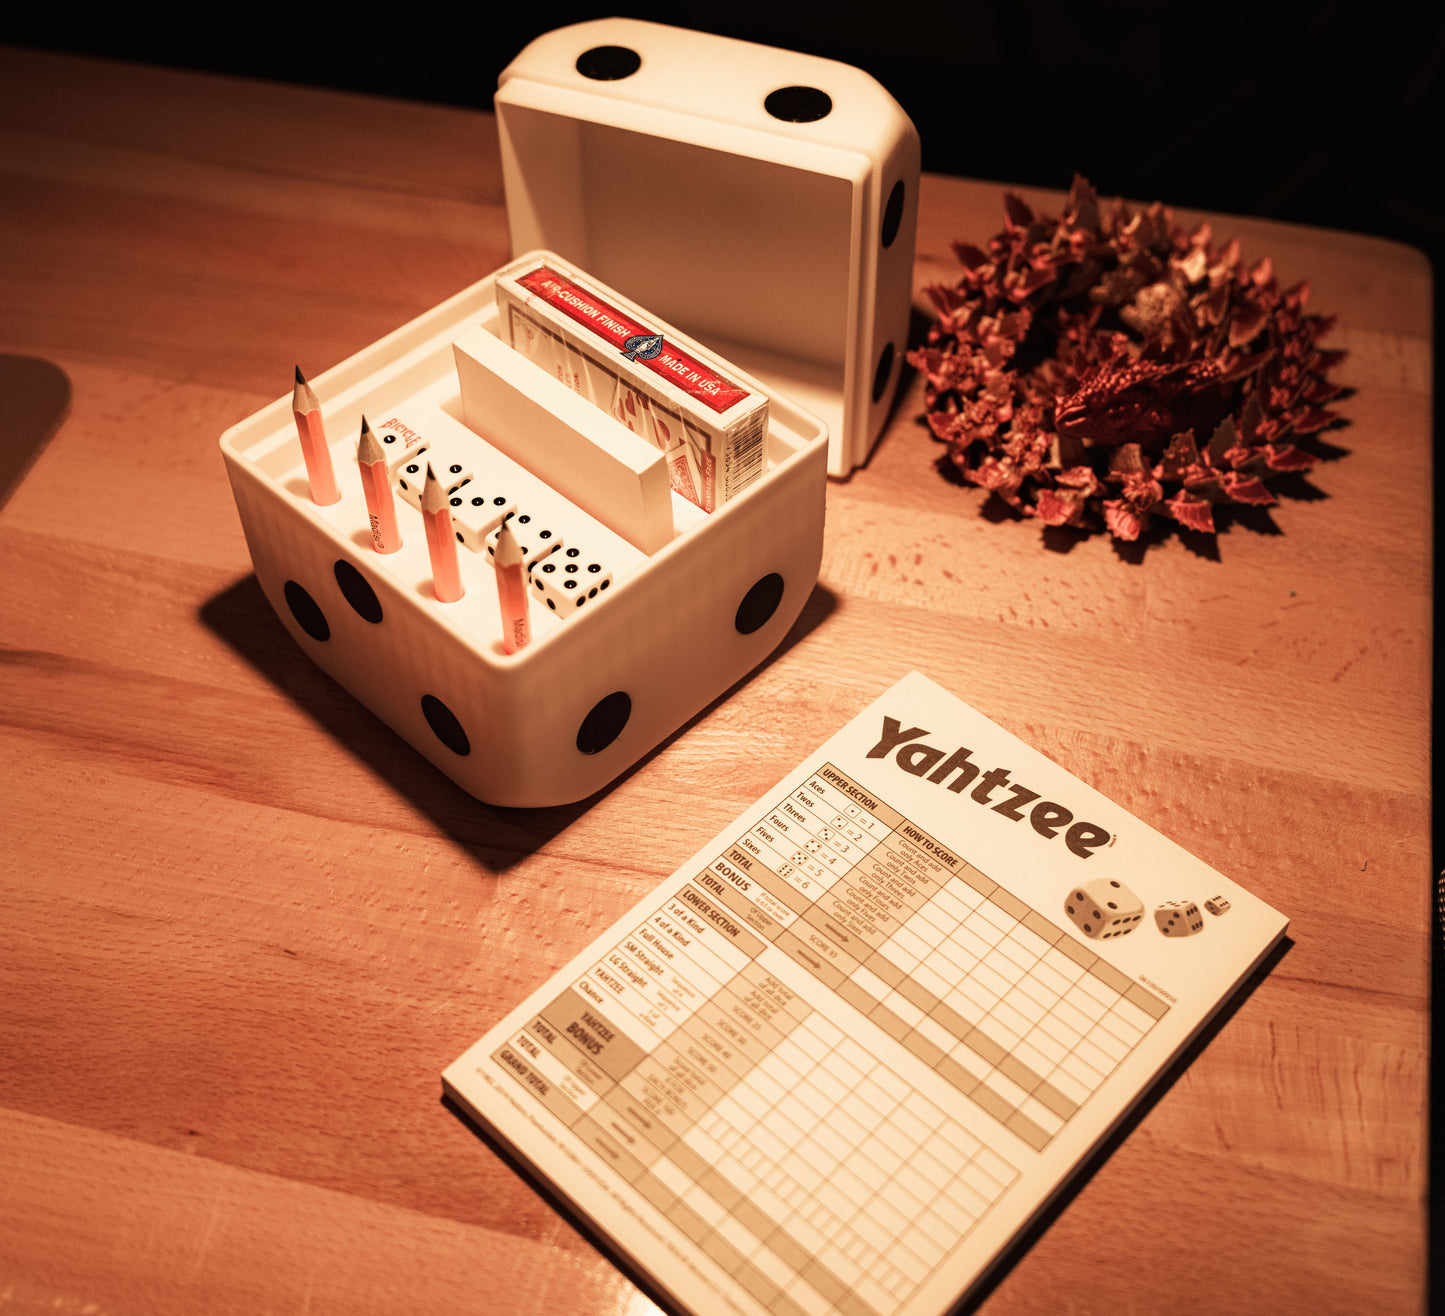 Game Cube - Dice, Cards, Yahtzee